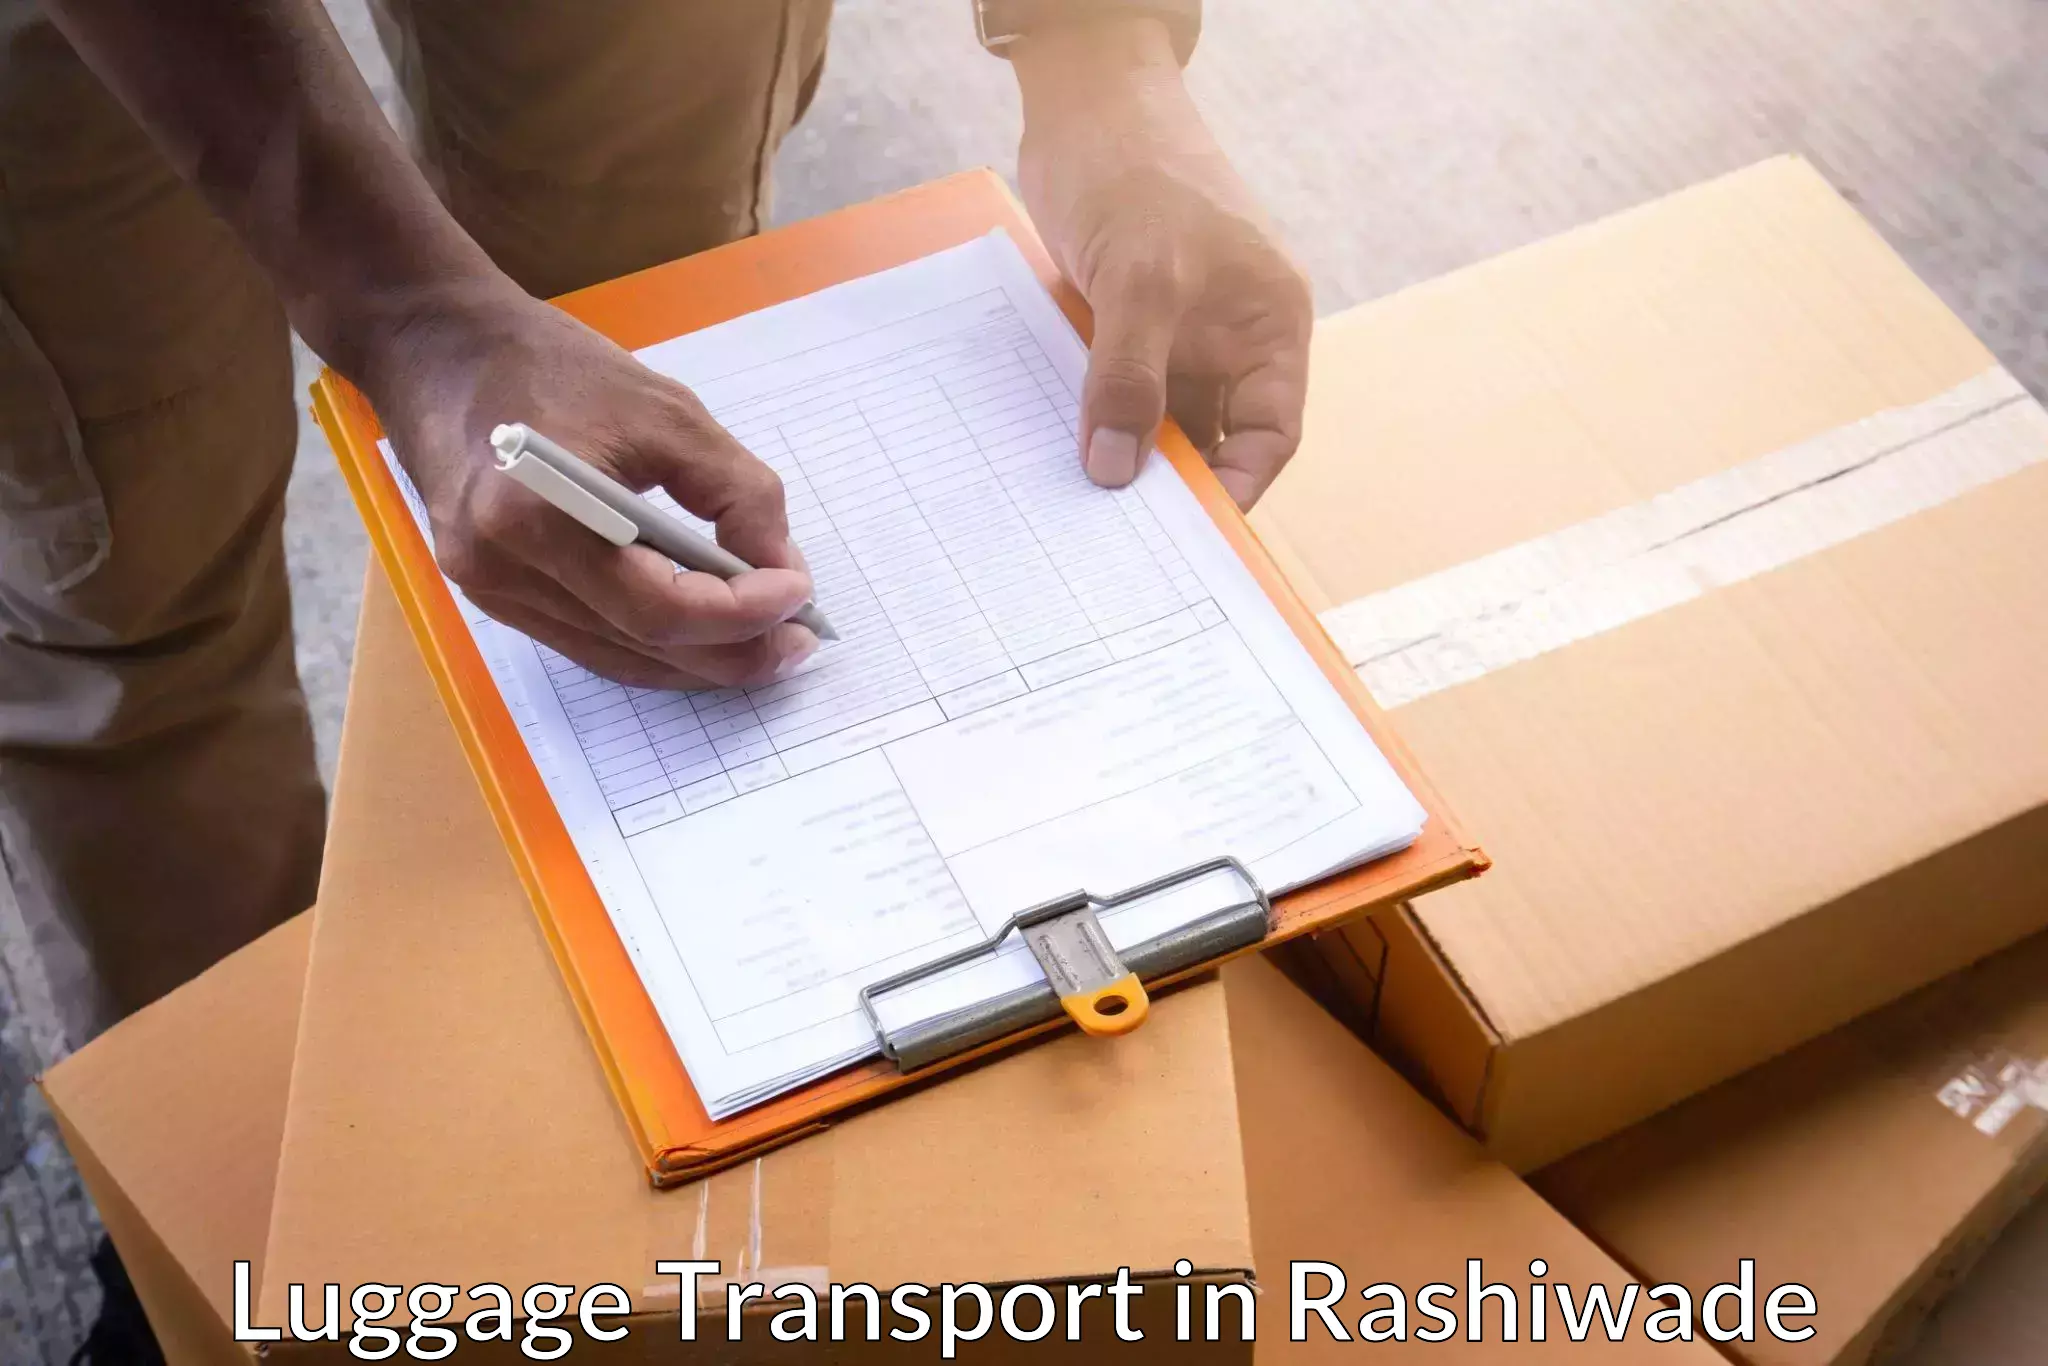 Luggage transport operations in Rashiwade